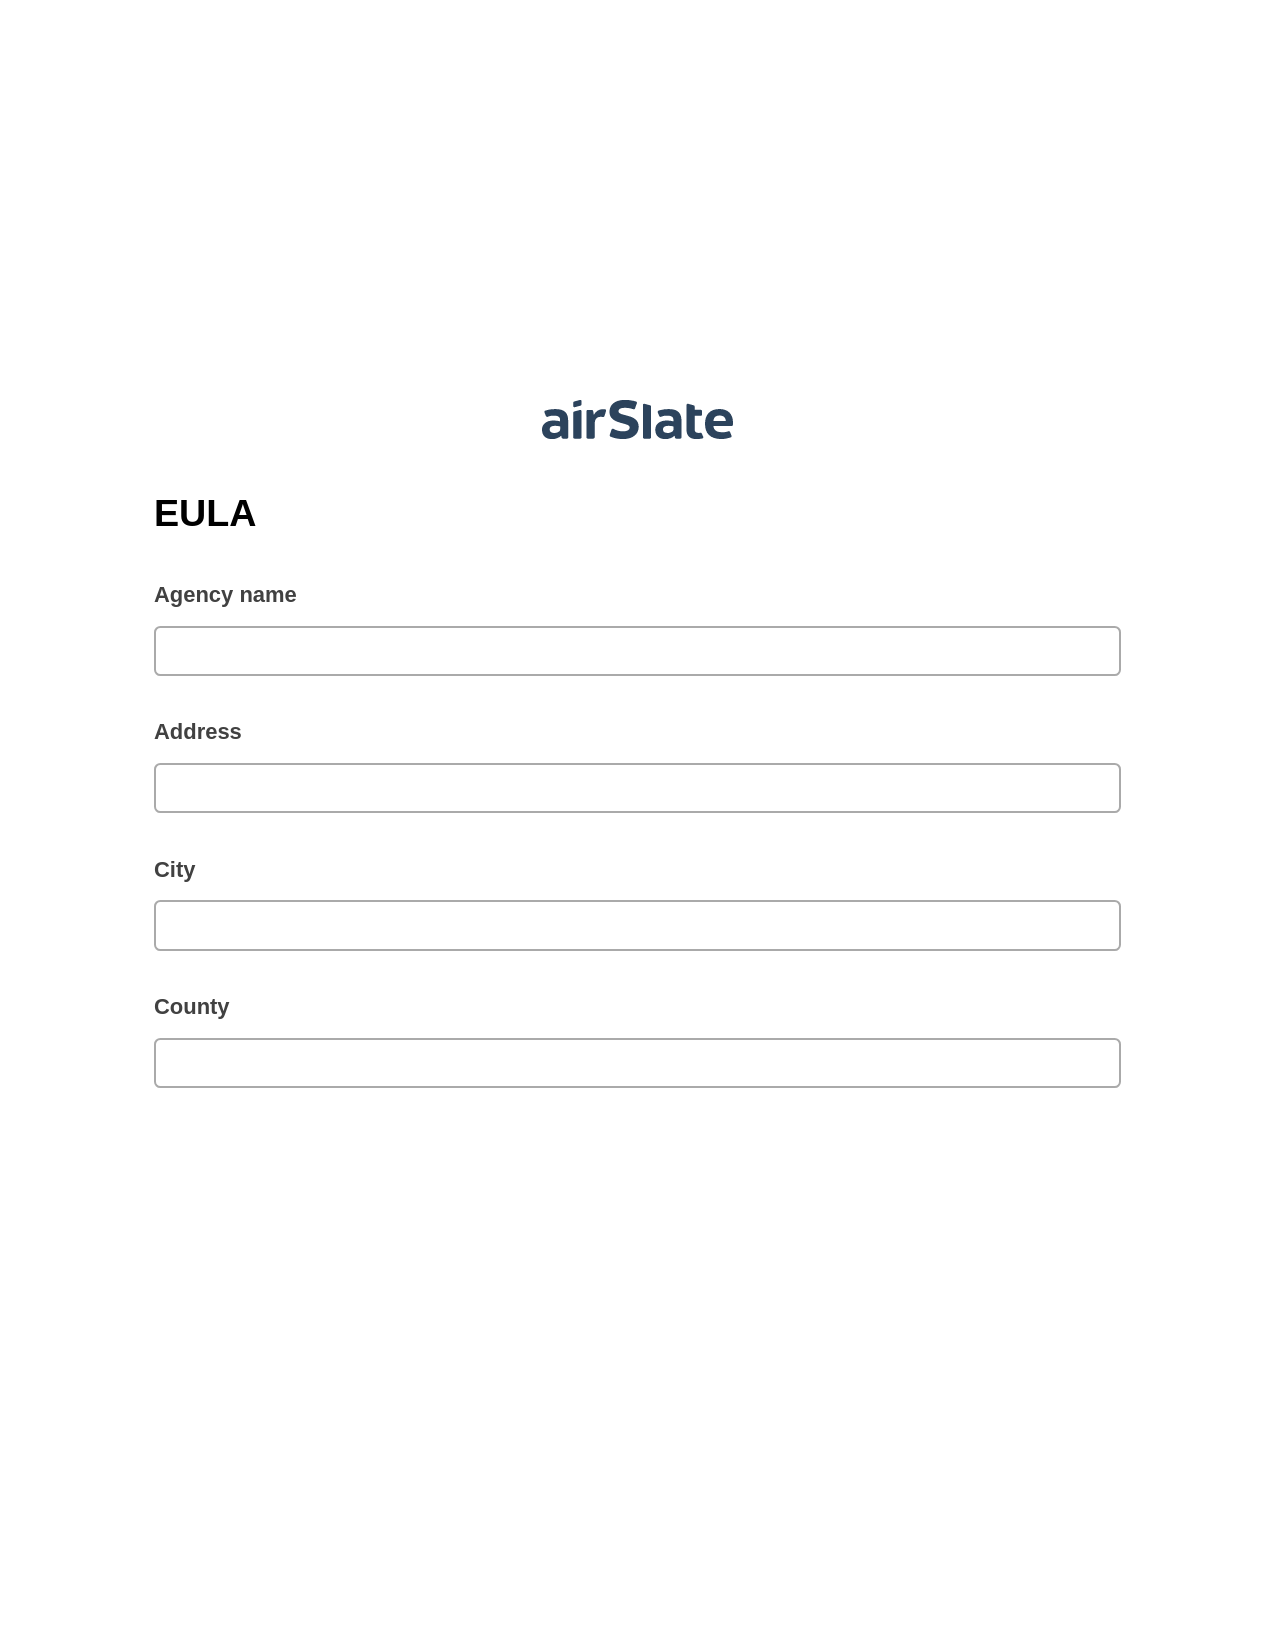 EULA Pre-fill from MySQL Dropdown Options Bot, 1Create Slate every Google Sheet Update Bot, Export to MySQL Bot